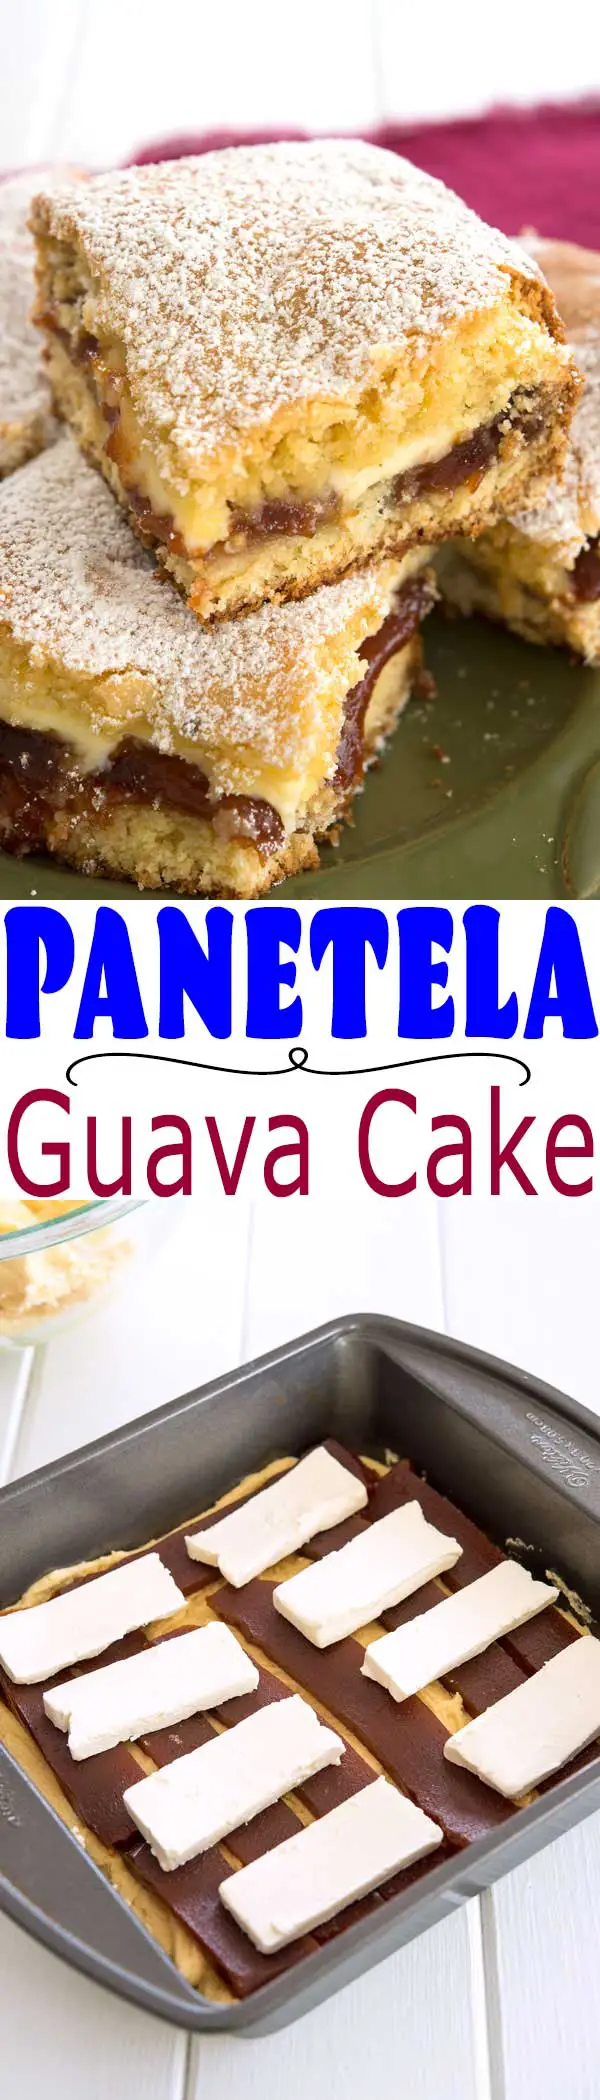 Cream cheese coffee cake meets the Caribbean with this guava cake recipe! | Cubana Panetela de Guayaba receta